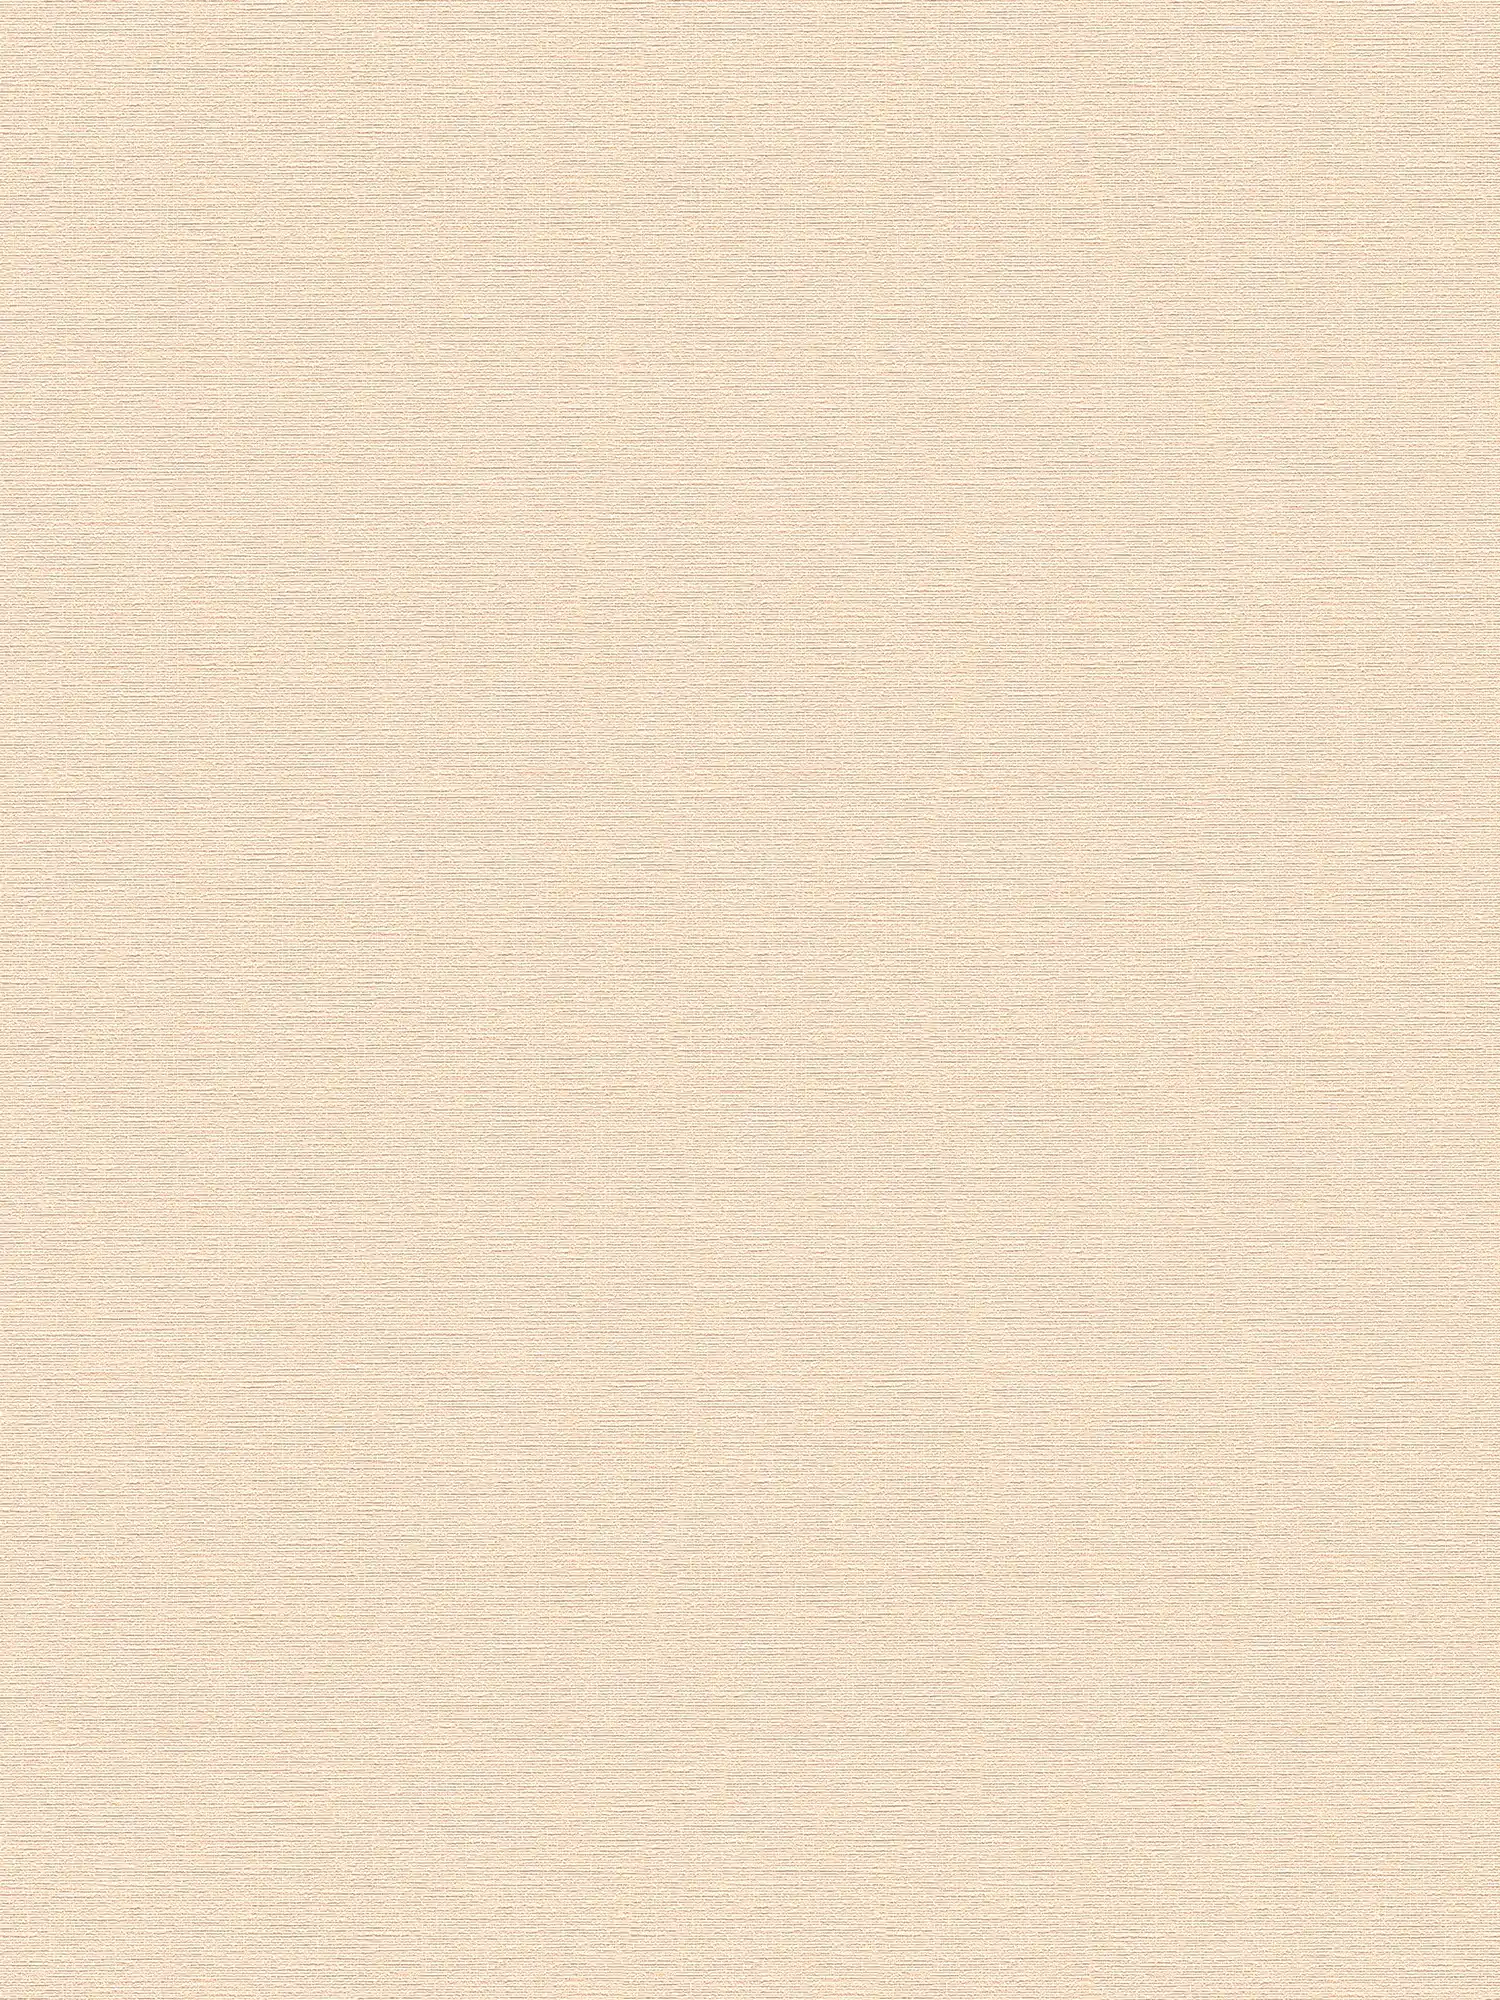         Pastell Tapete Rosa uni mit dezentem Strukturmuster
    